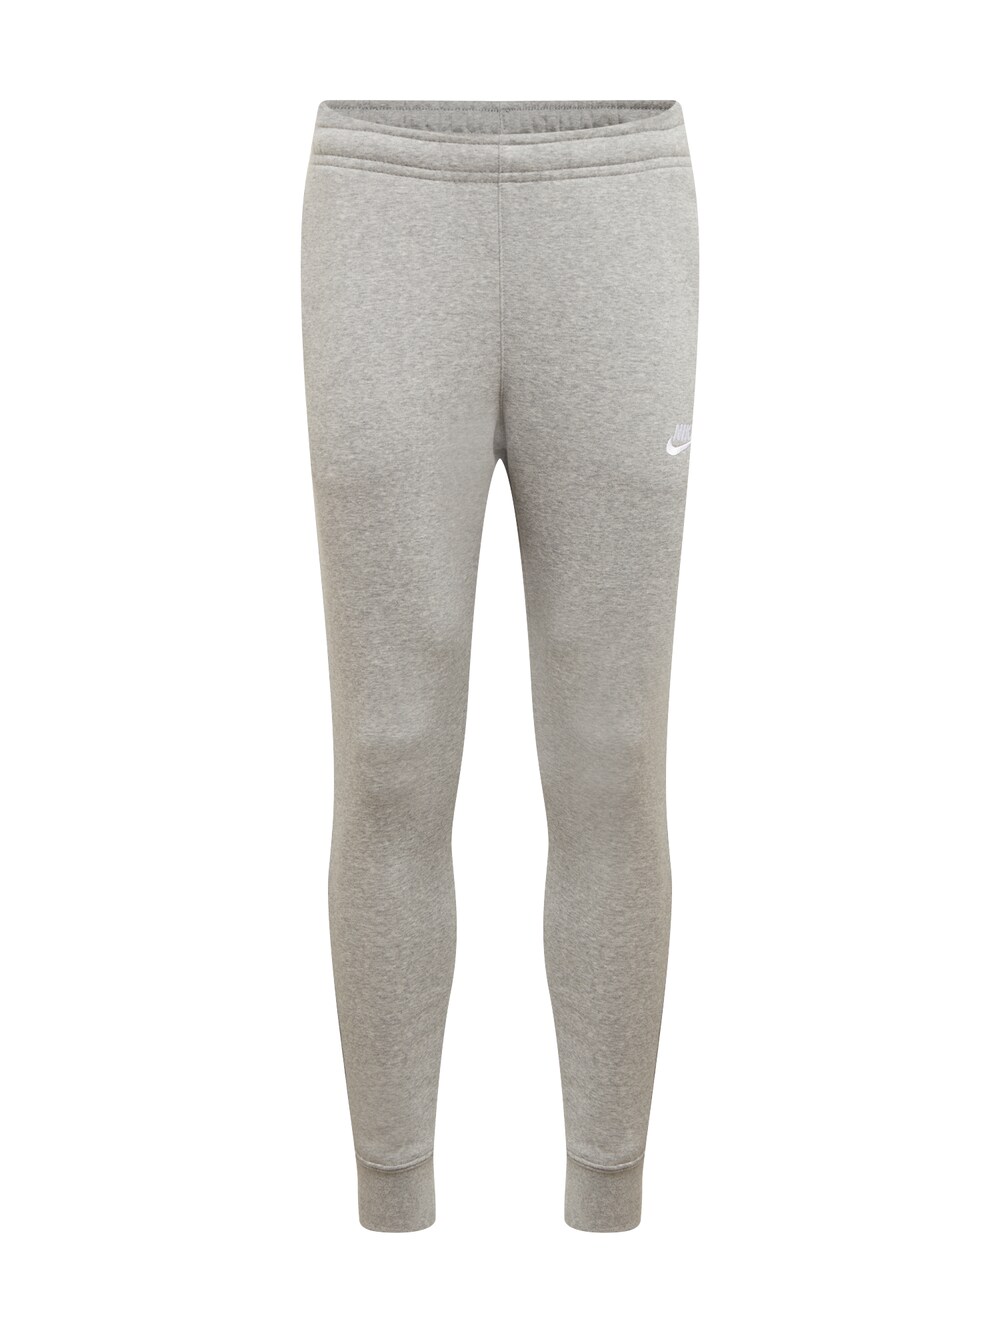 Зауженные брюки Nike Sportswear Club Fleece, светло-серый